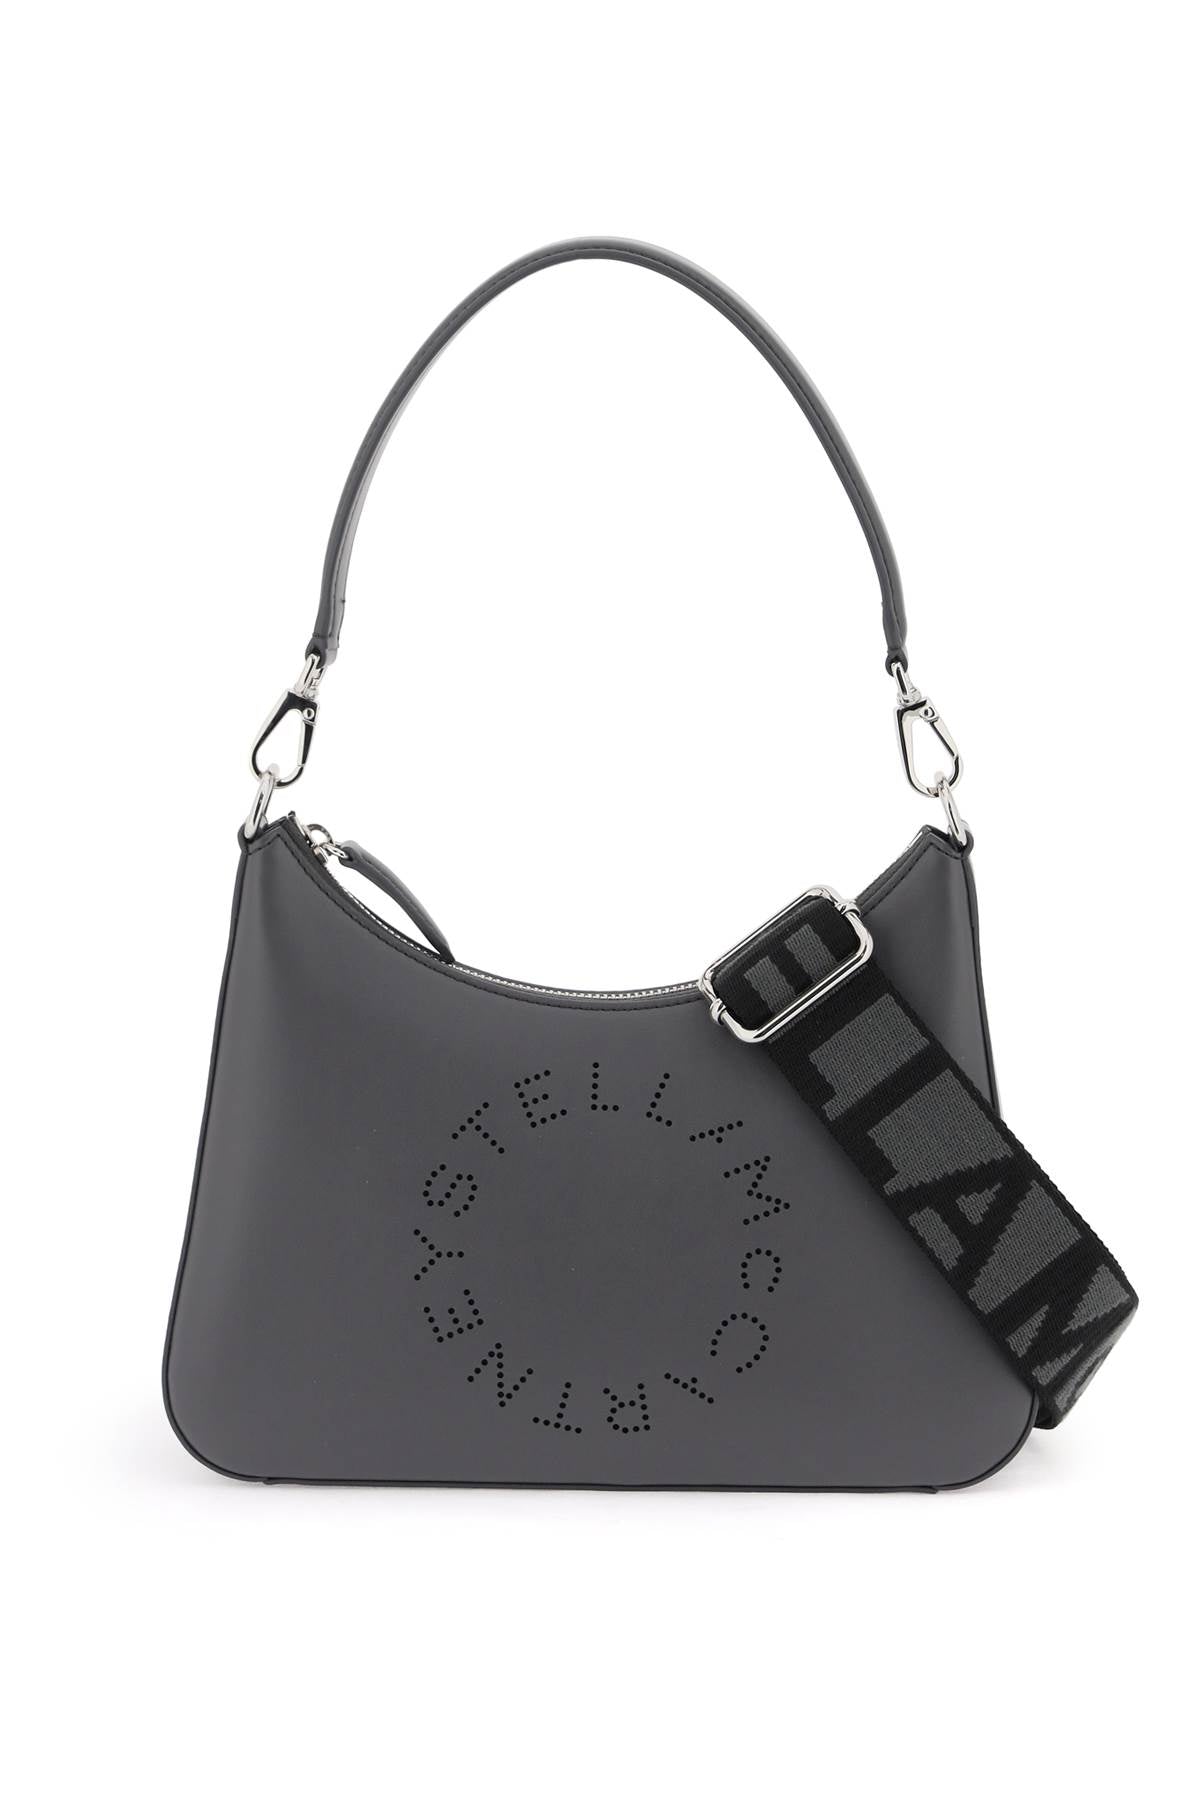 Stella mccartney small logo shoulder bag-0